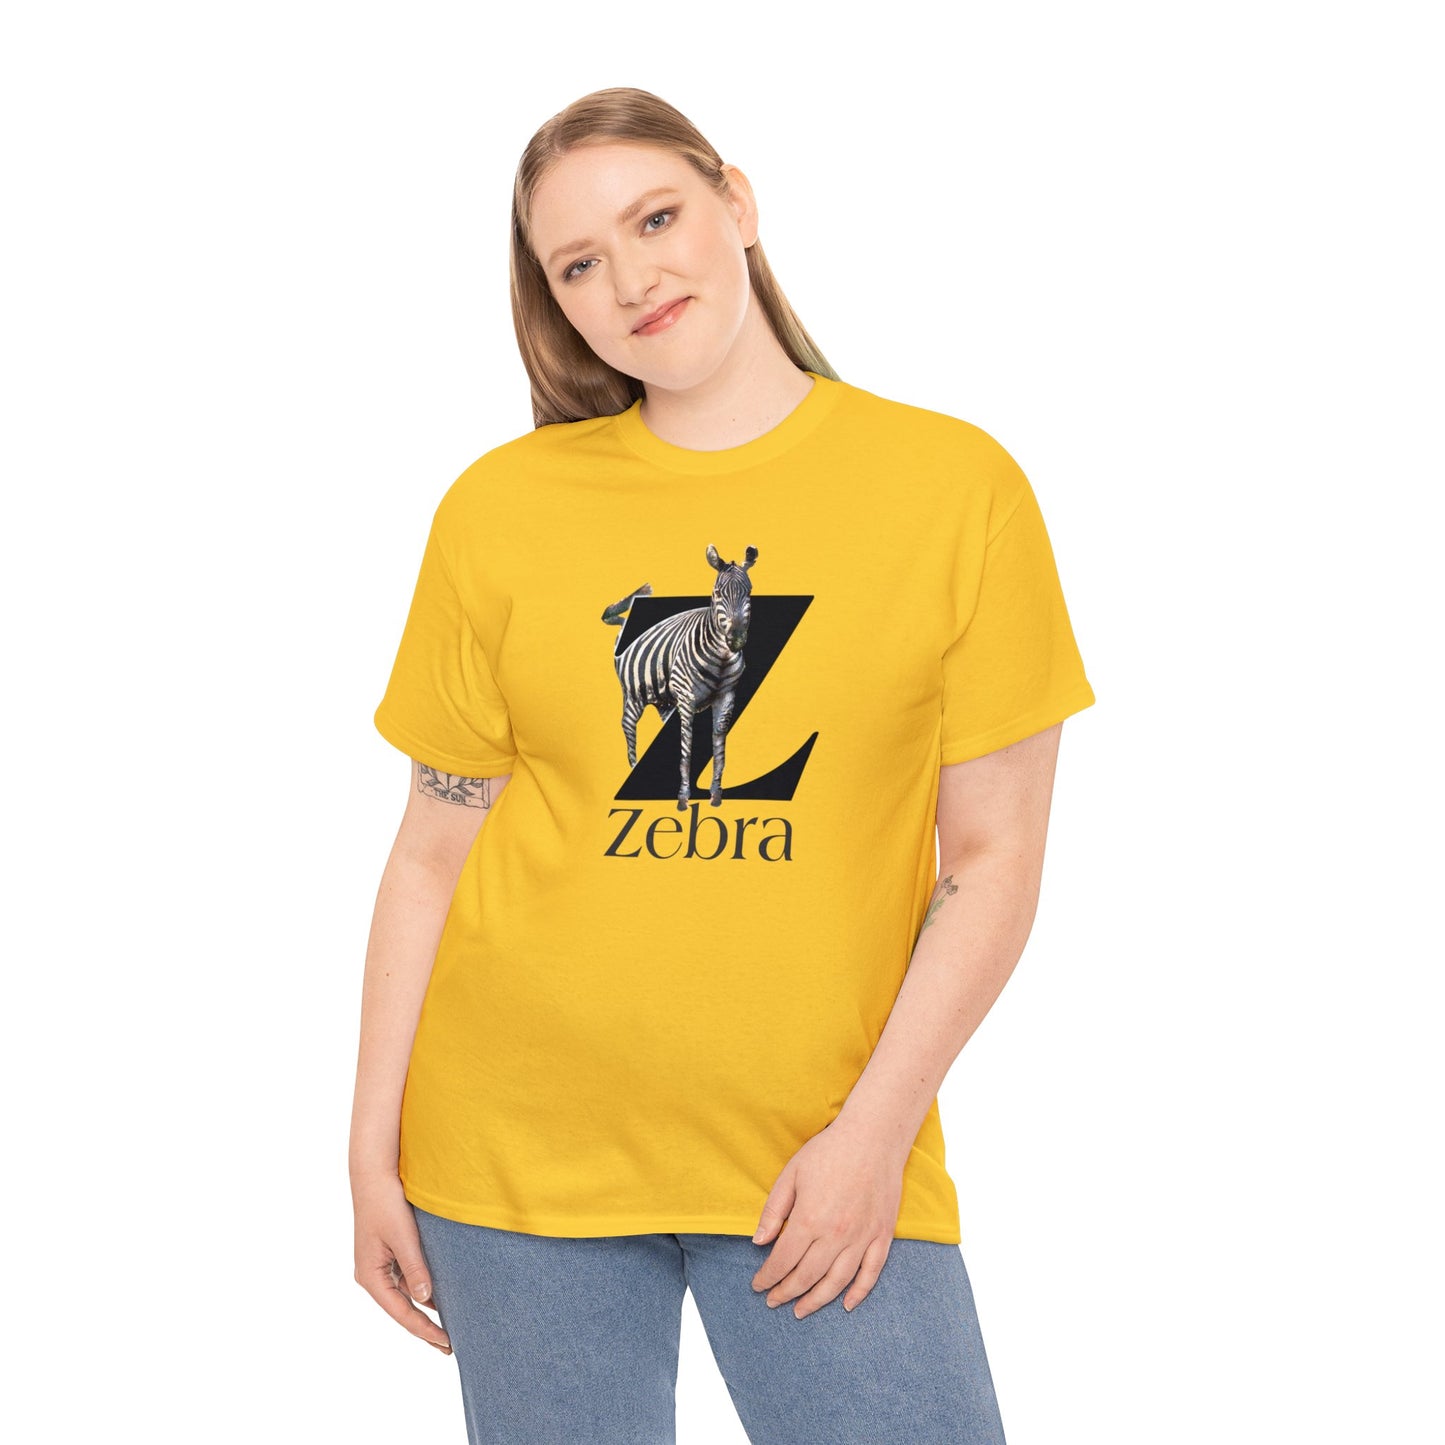 Z is for Zebra t-shirt, Zebra Drawing T-Shirt, Zebra animal t-shirt, Zebra Illustration,